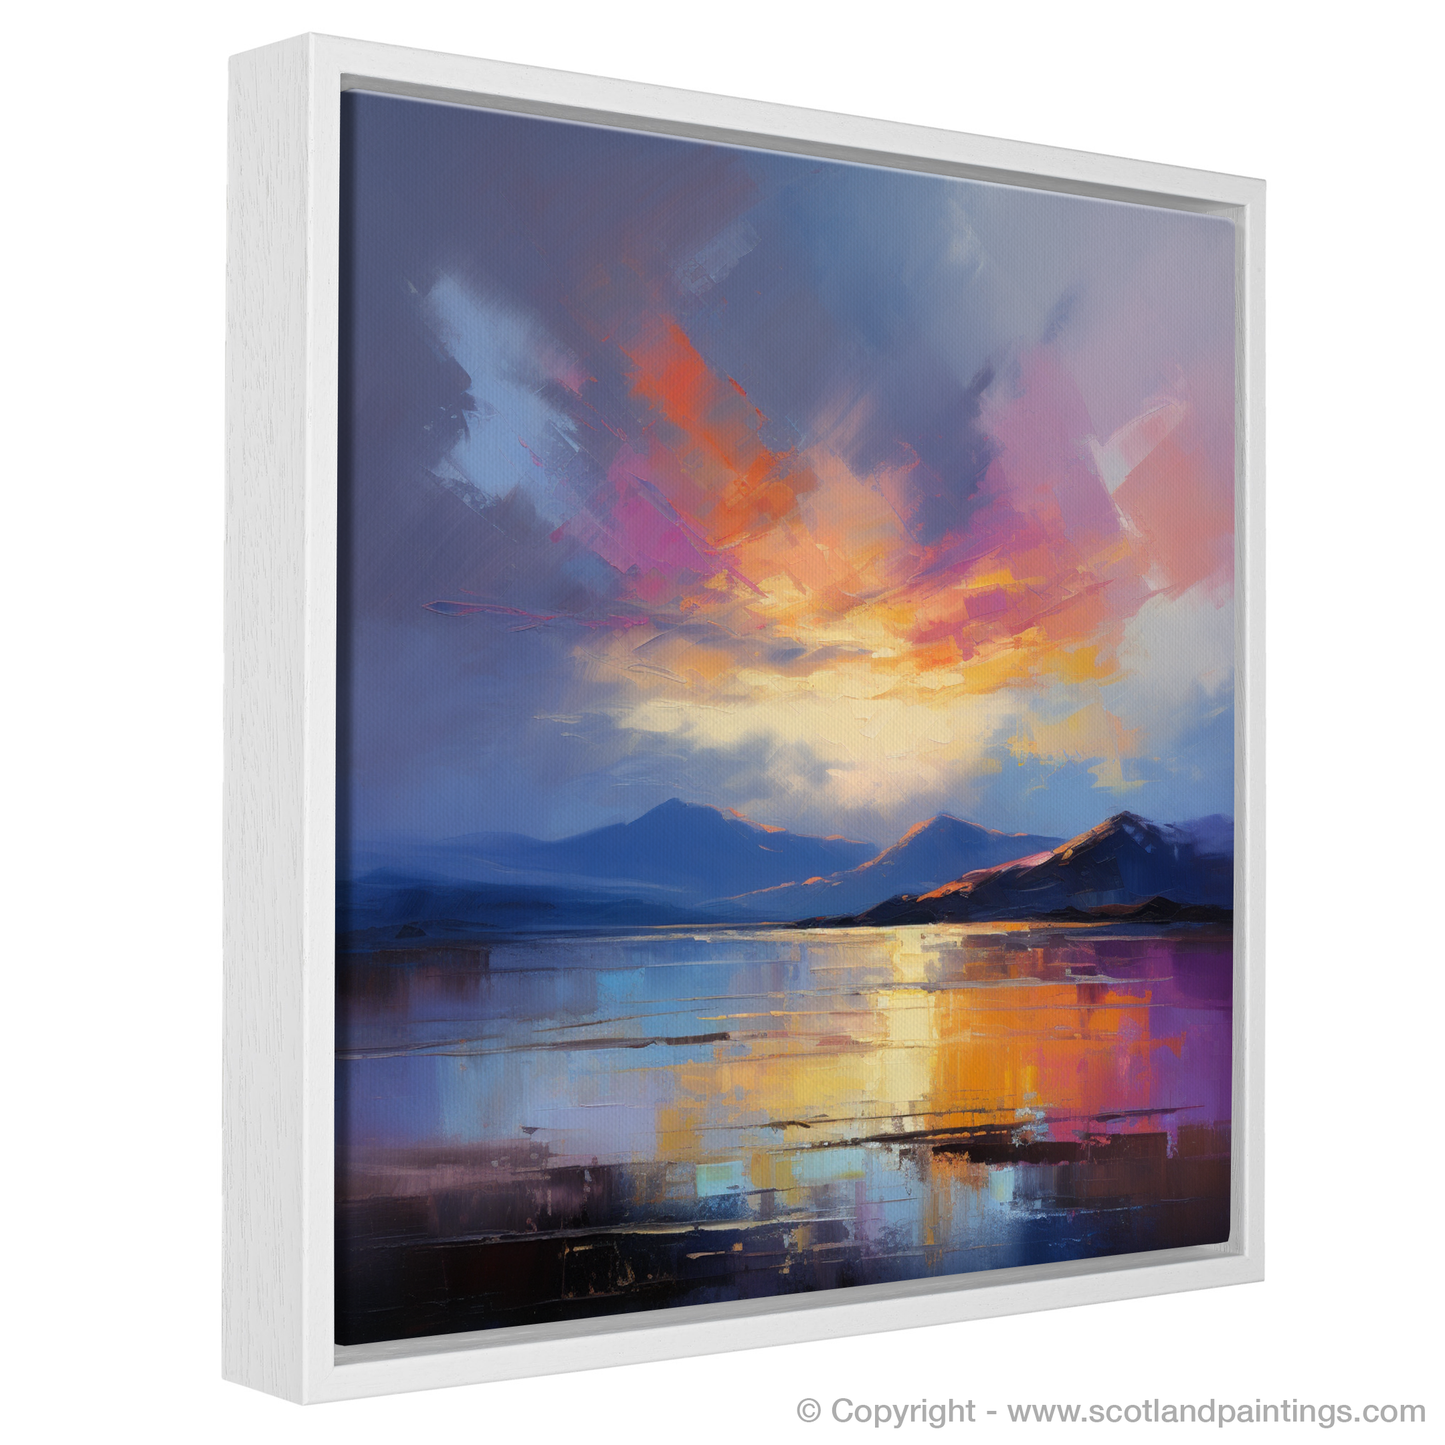 Painting and Art Print of A huge sky above Loch Lomond entitled "Sky Ablaze: The Majesty of Loch Lomond".